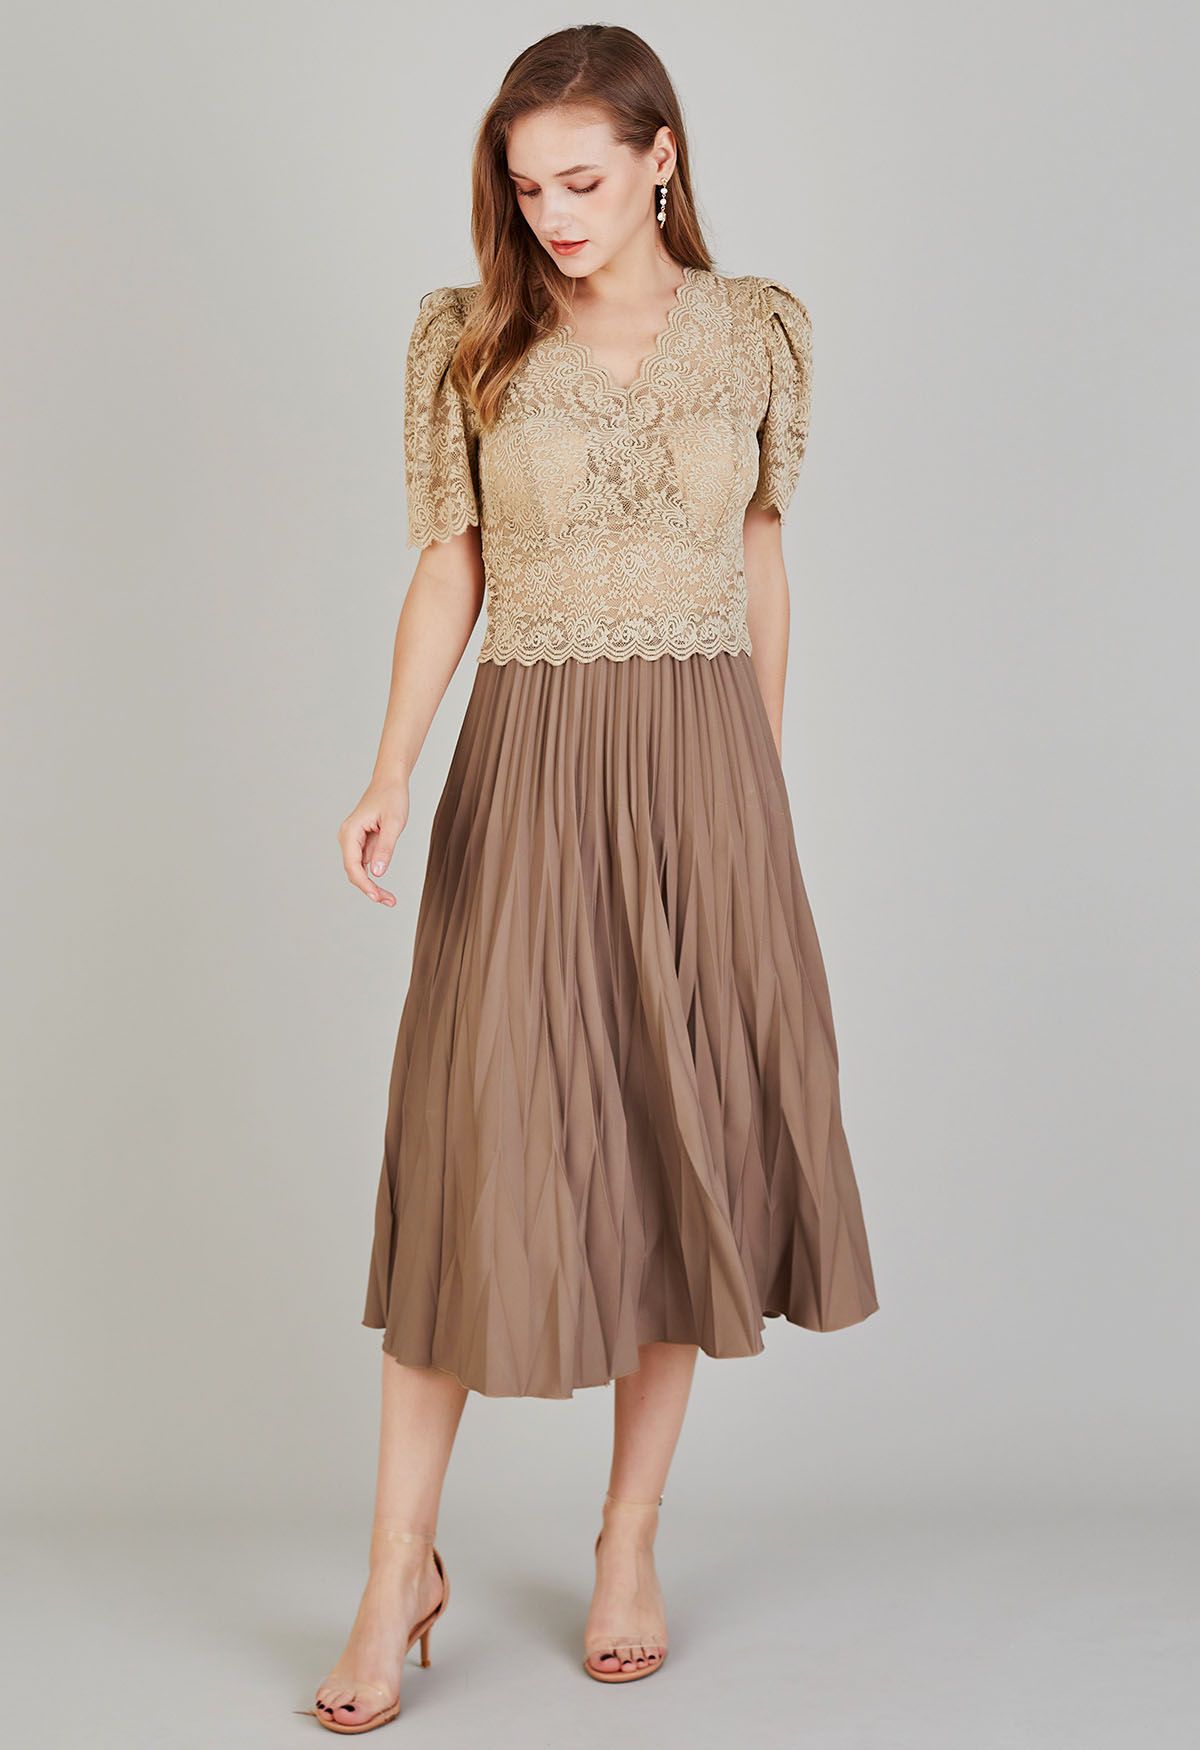 Irregular Pleated Midi Skirt in Brown